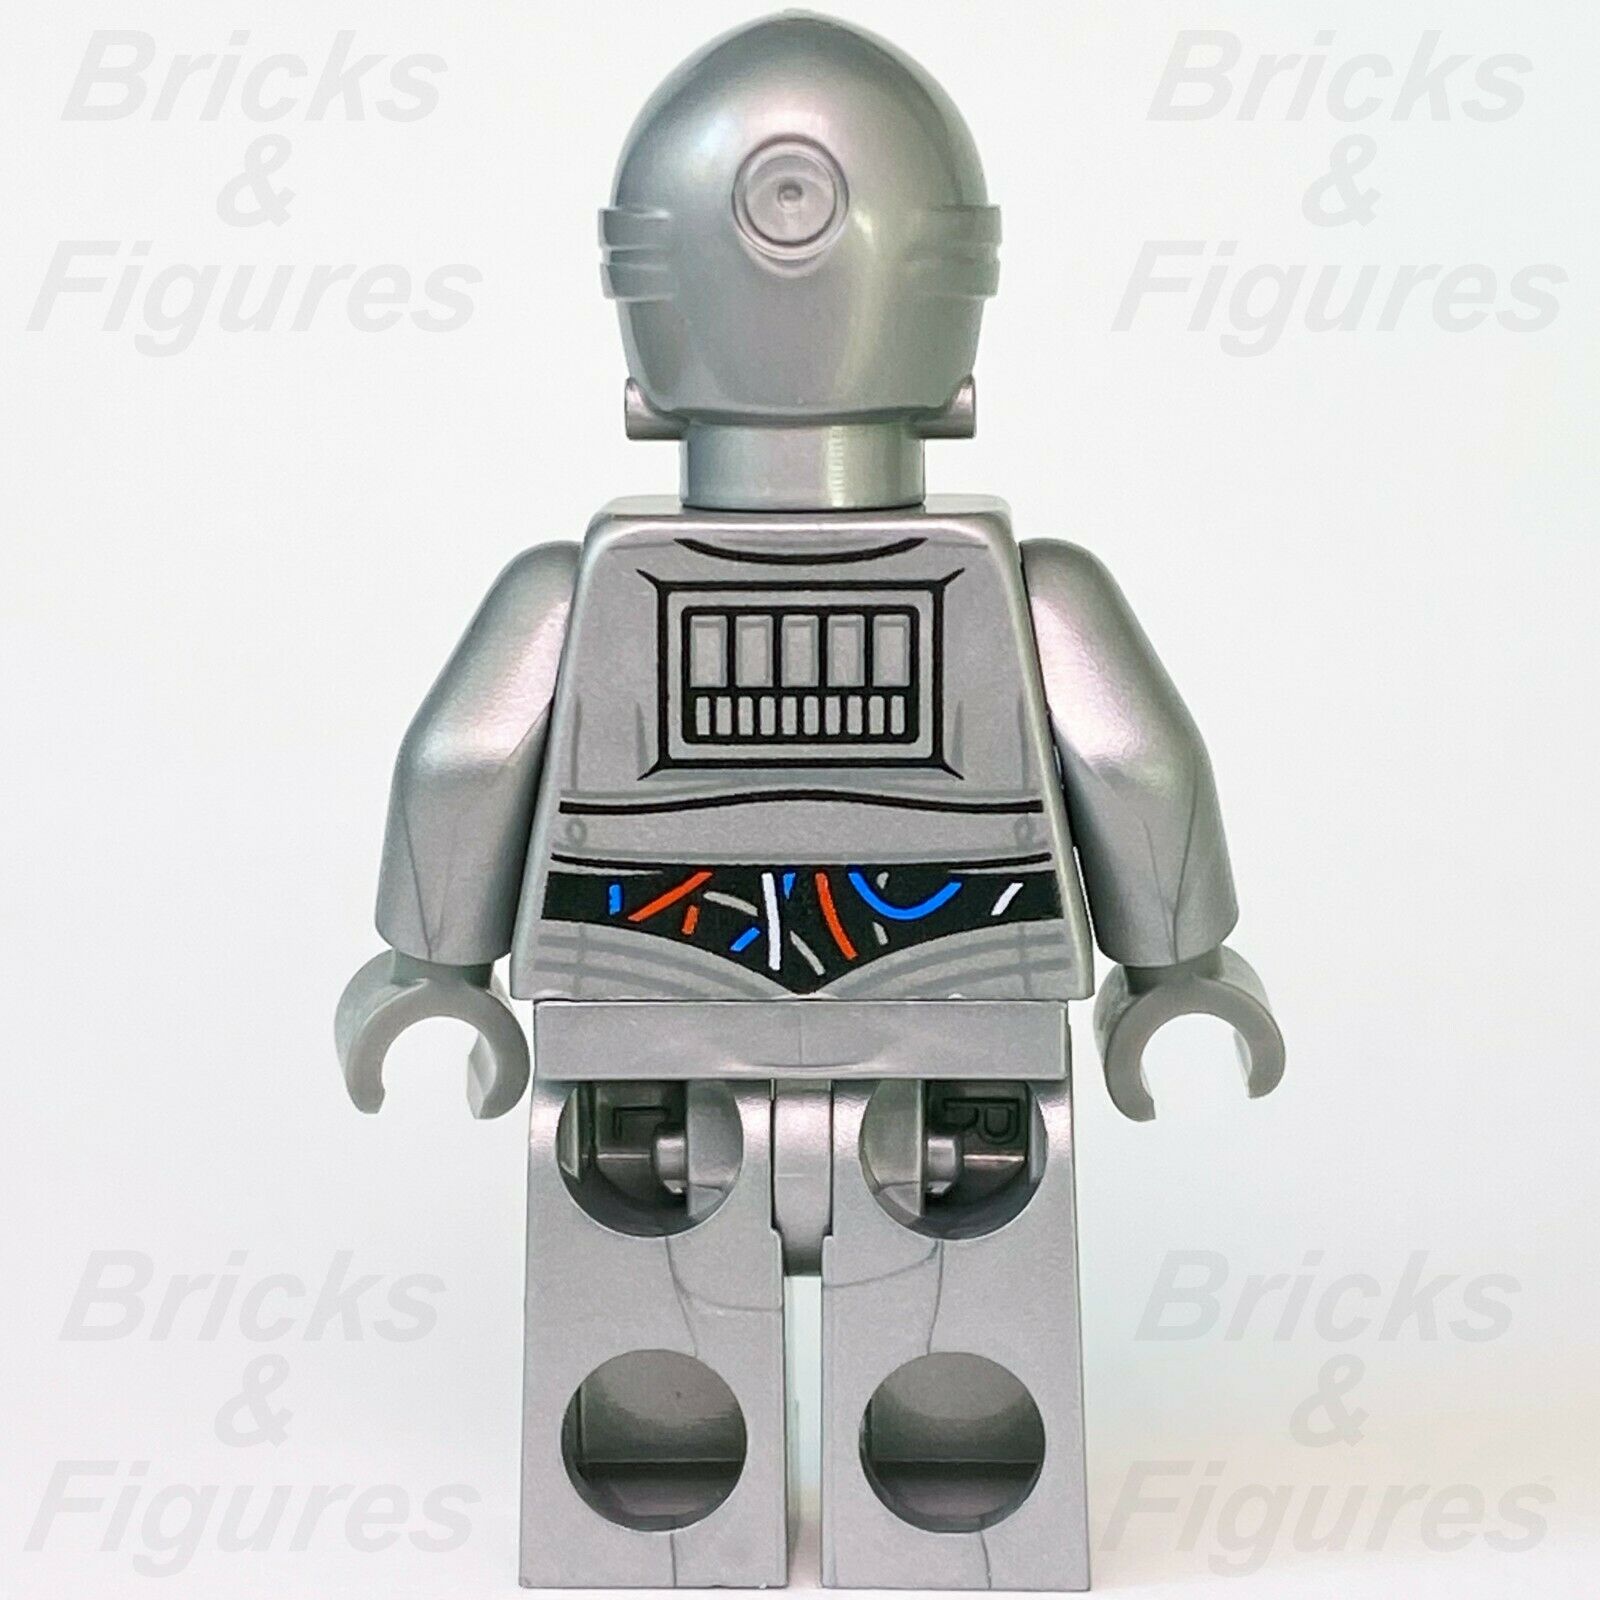 New Star Wars LEGO U-3PO Silver Protocol Droid A New Hope Minifigure 75146 - Bricks & Figures